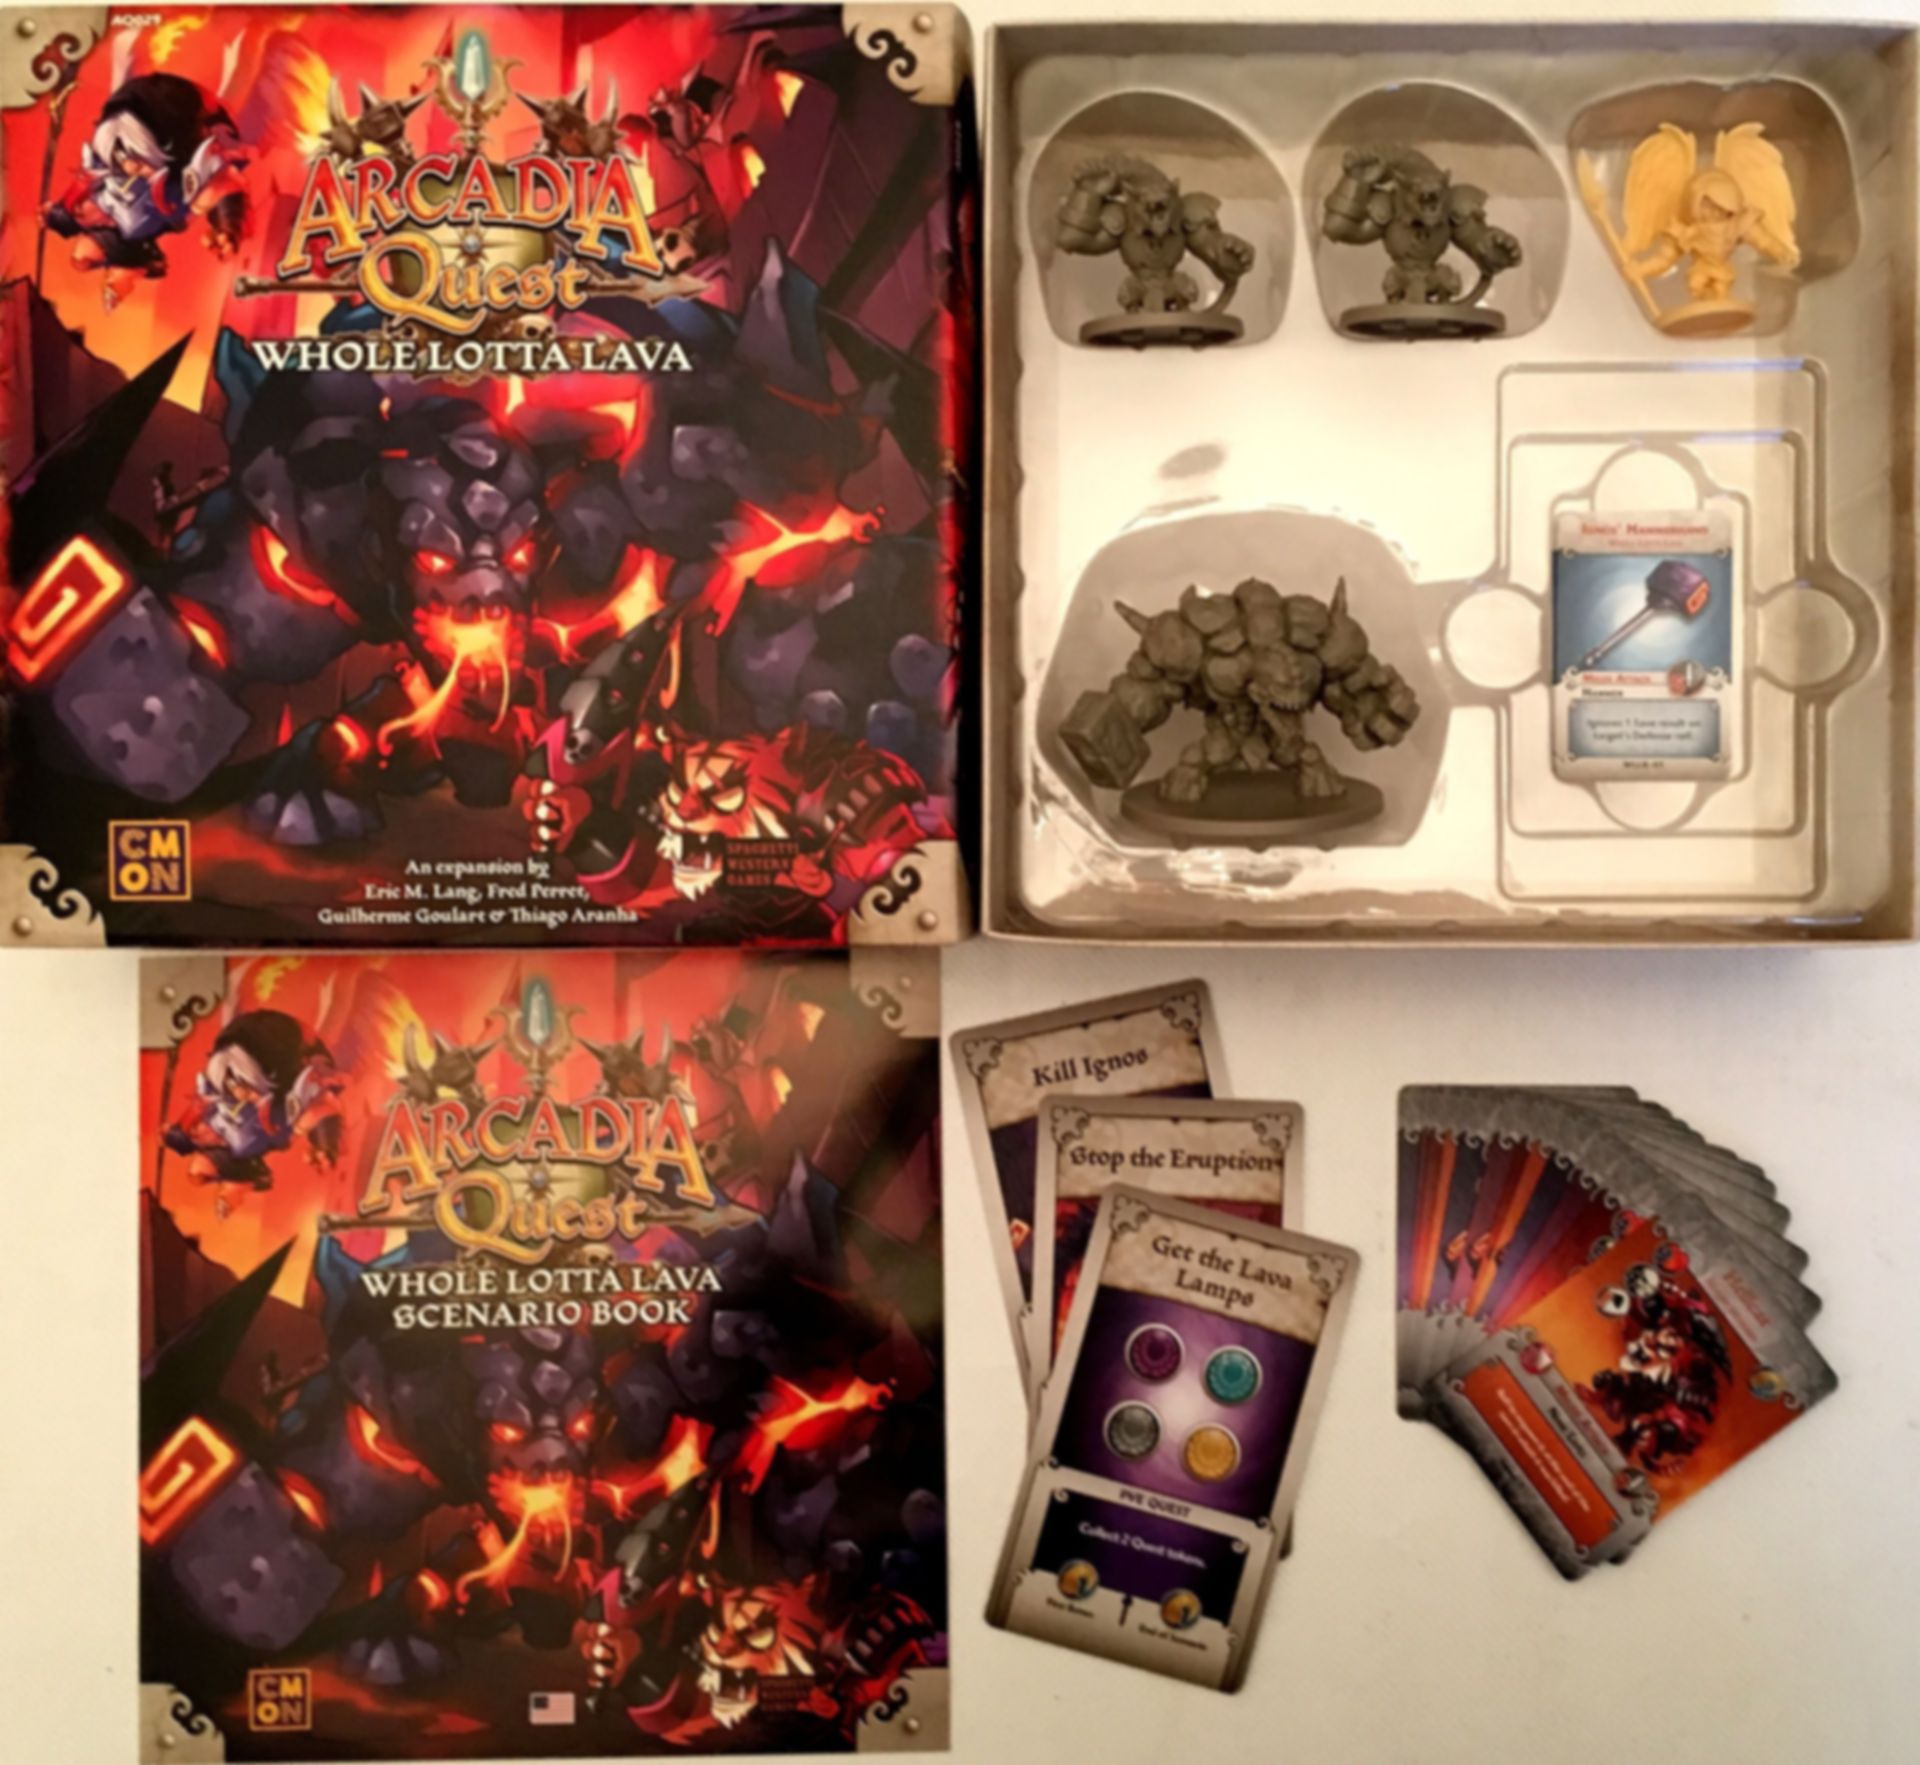 Arcadia Quest: Inferno - Whole Lotta Lava partes